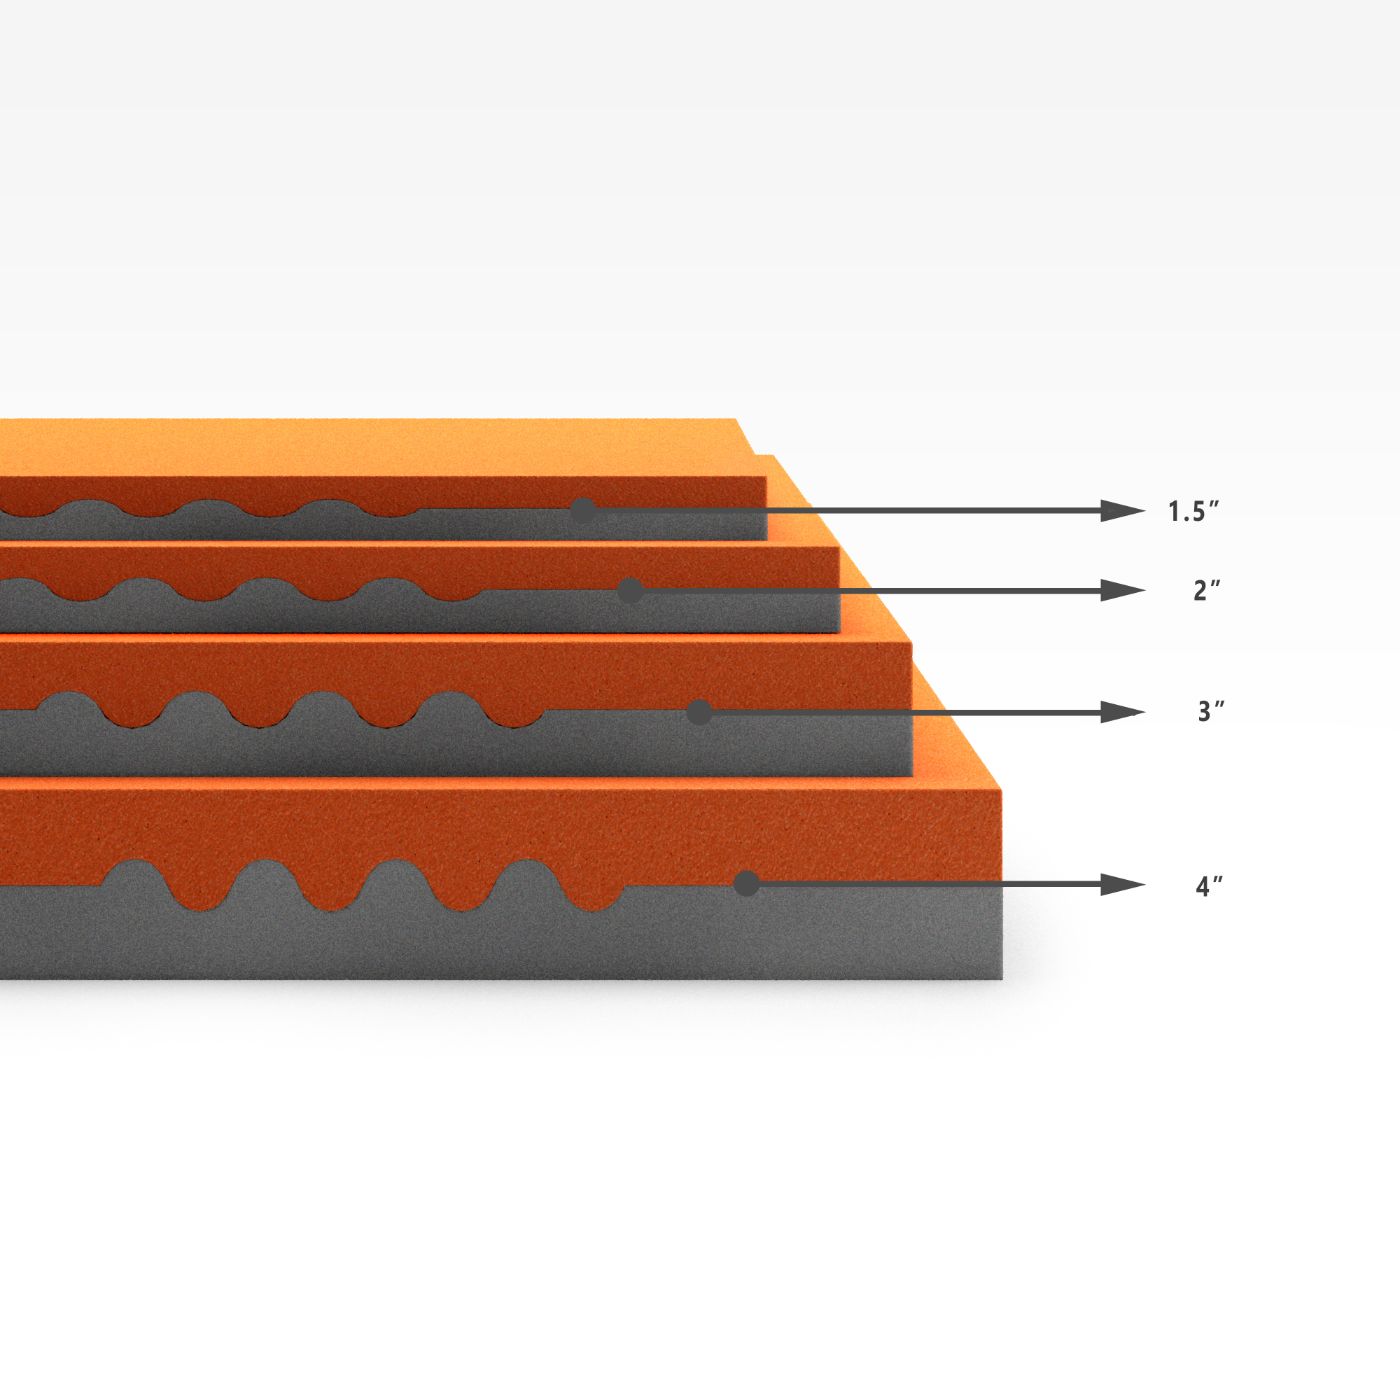 Lumbar Support TorsoTec Copper Memory Foam Mattress Topper profile heights